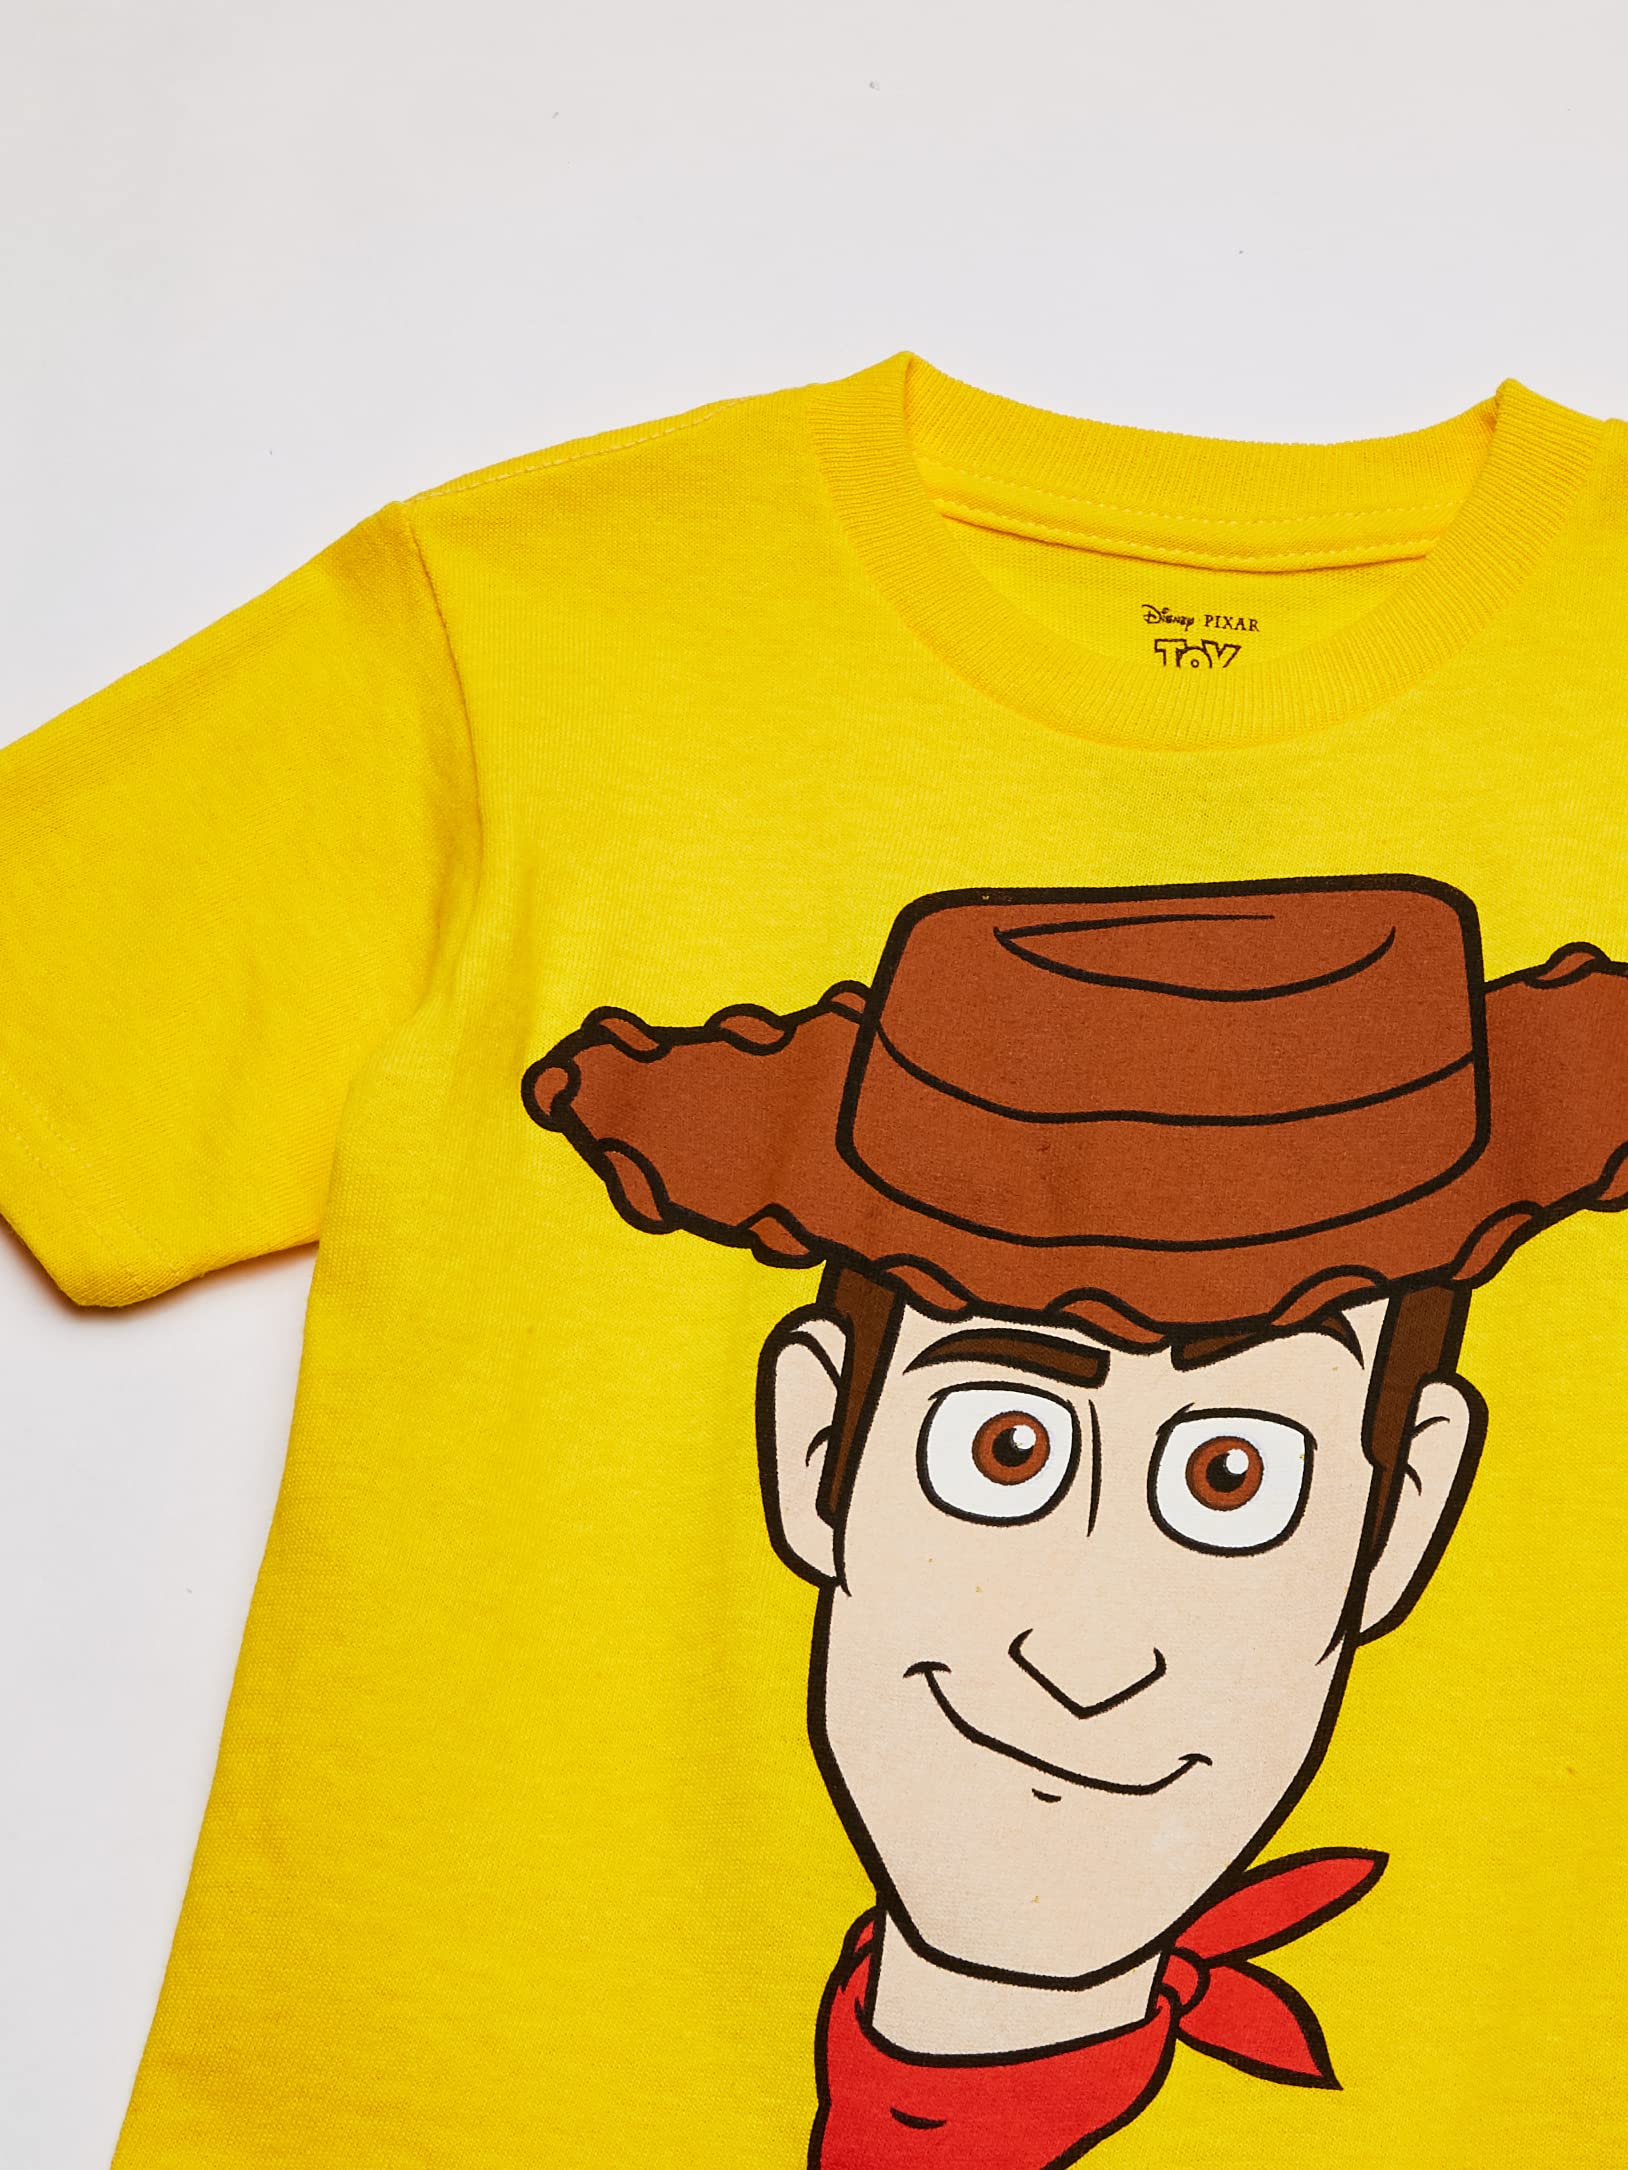 Disney Boys' Woody T-Shirt